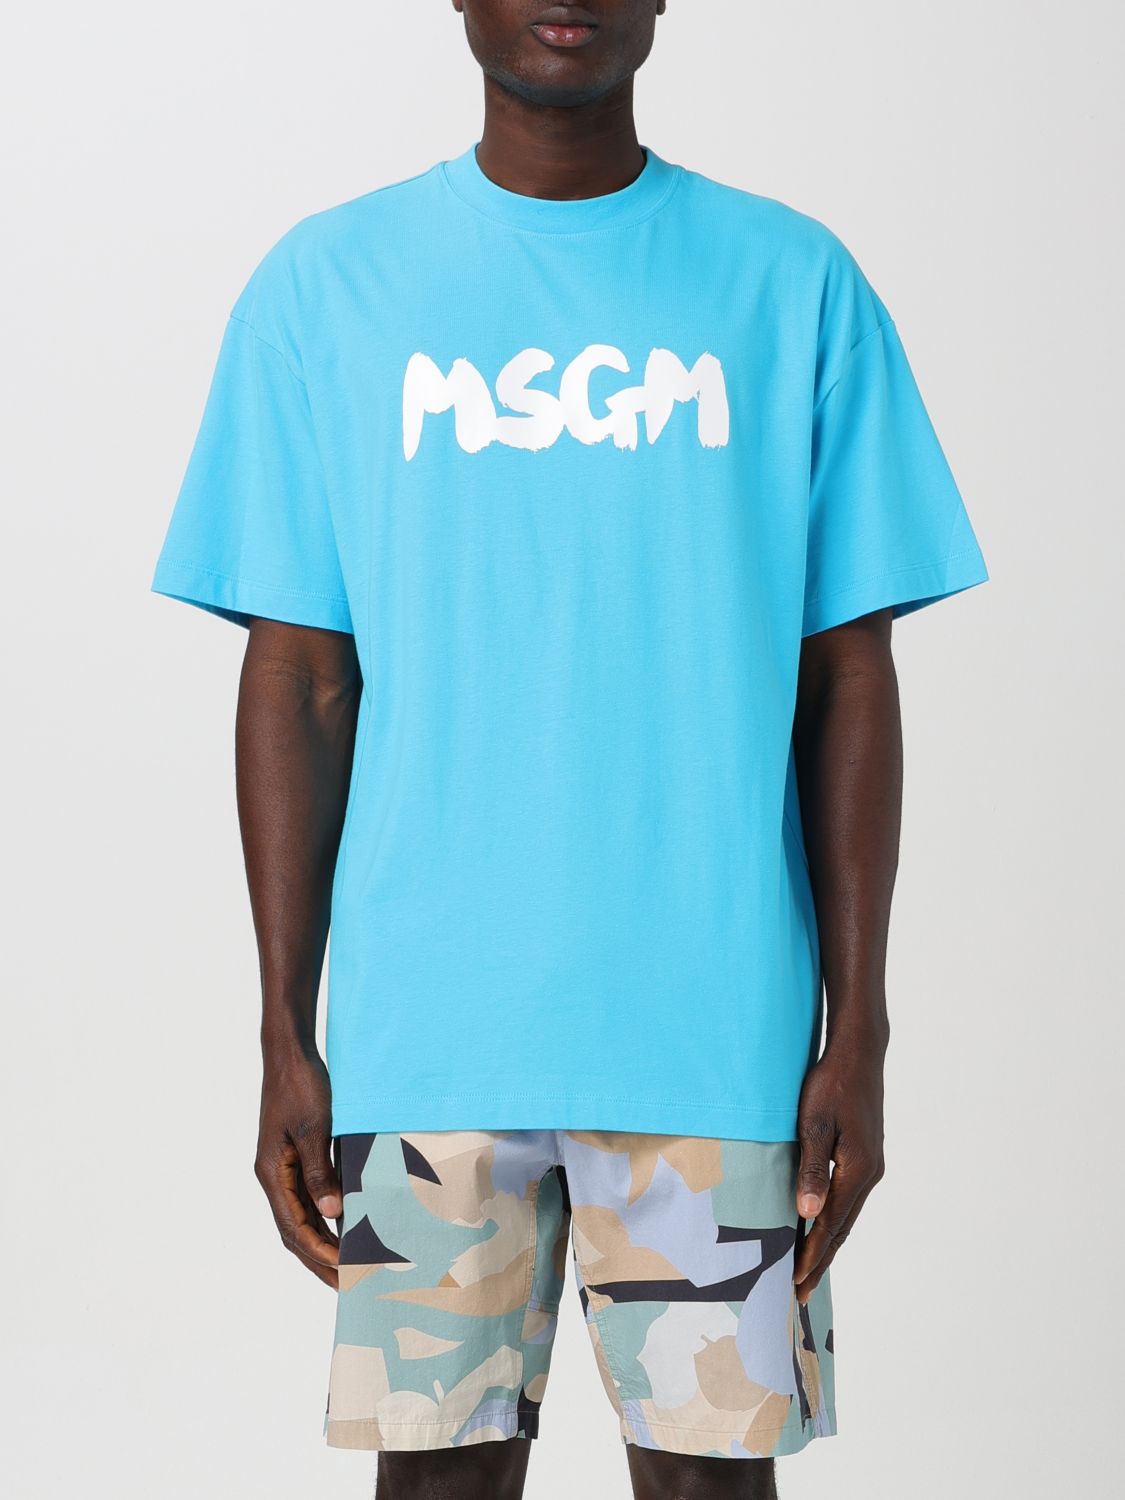 Msgm T-Shirt MSGM Men color Turquoise